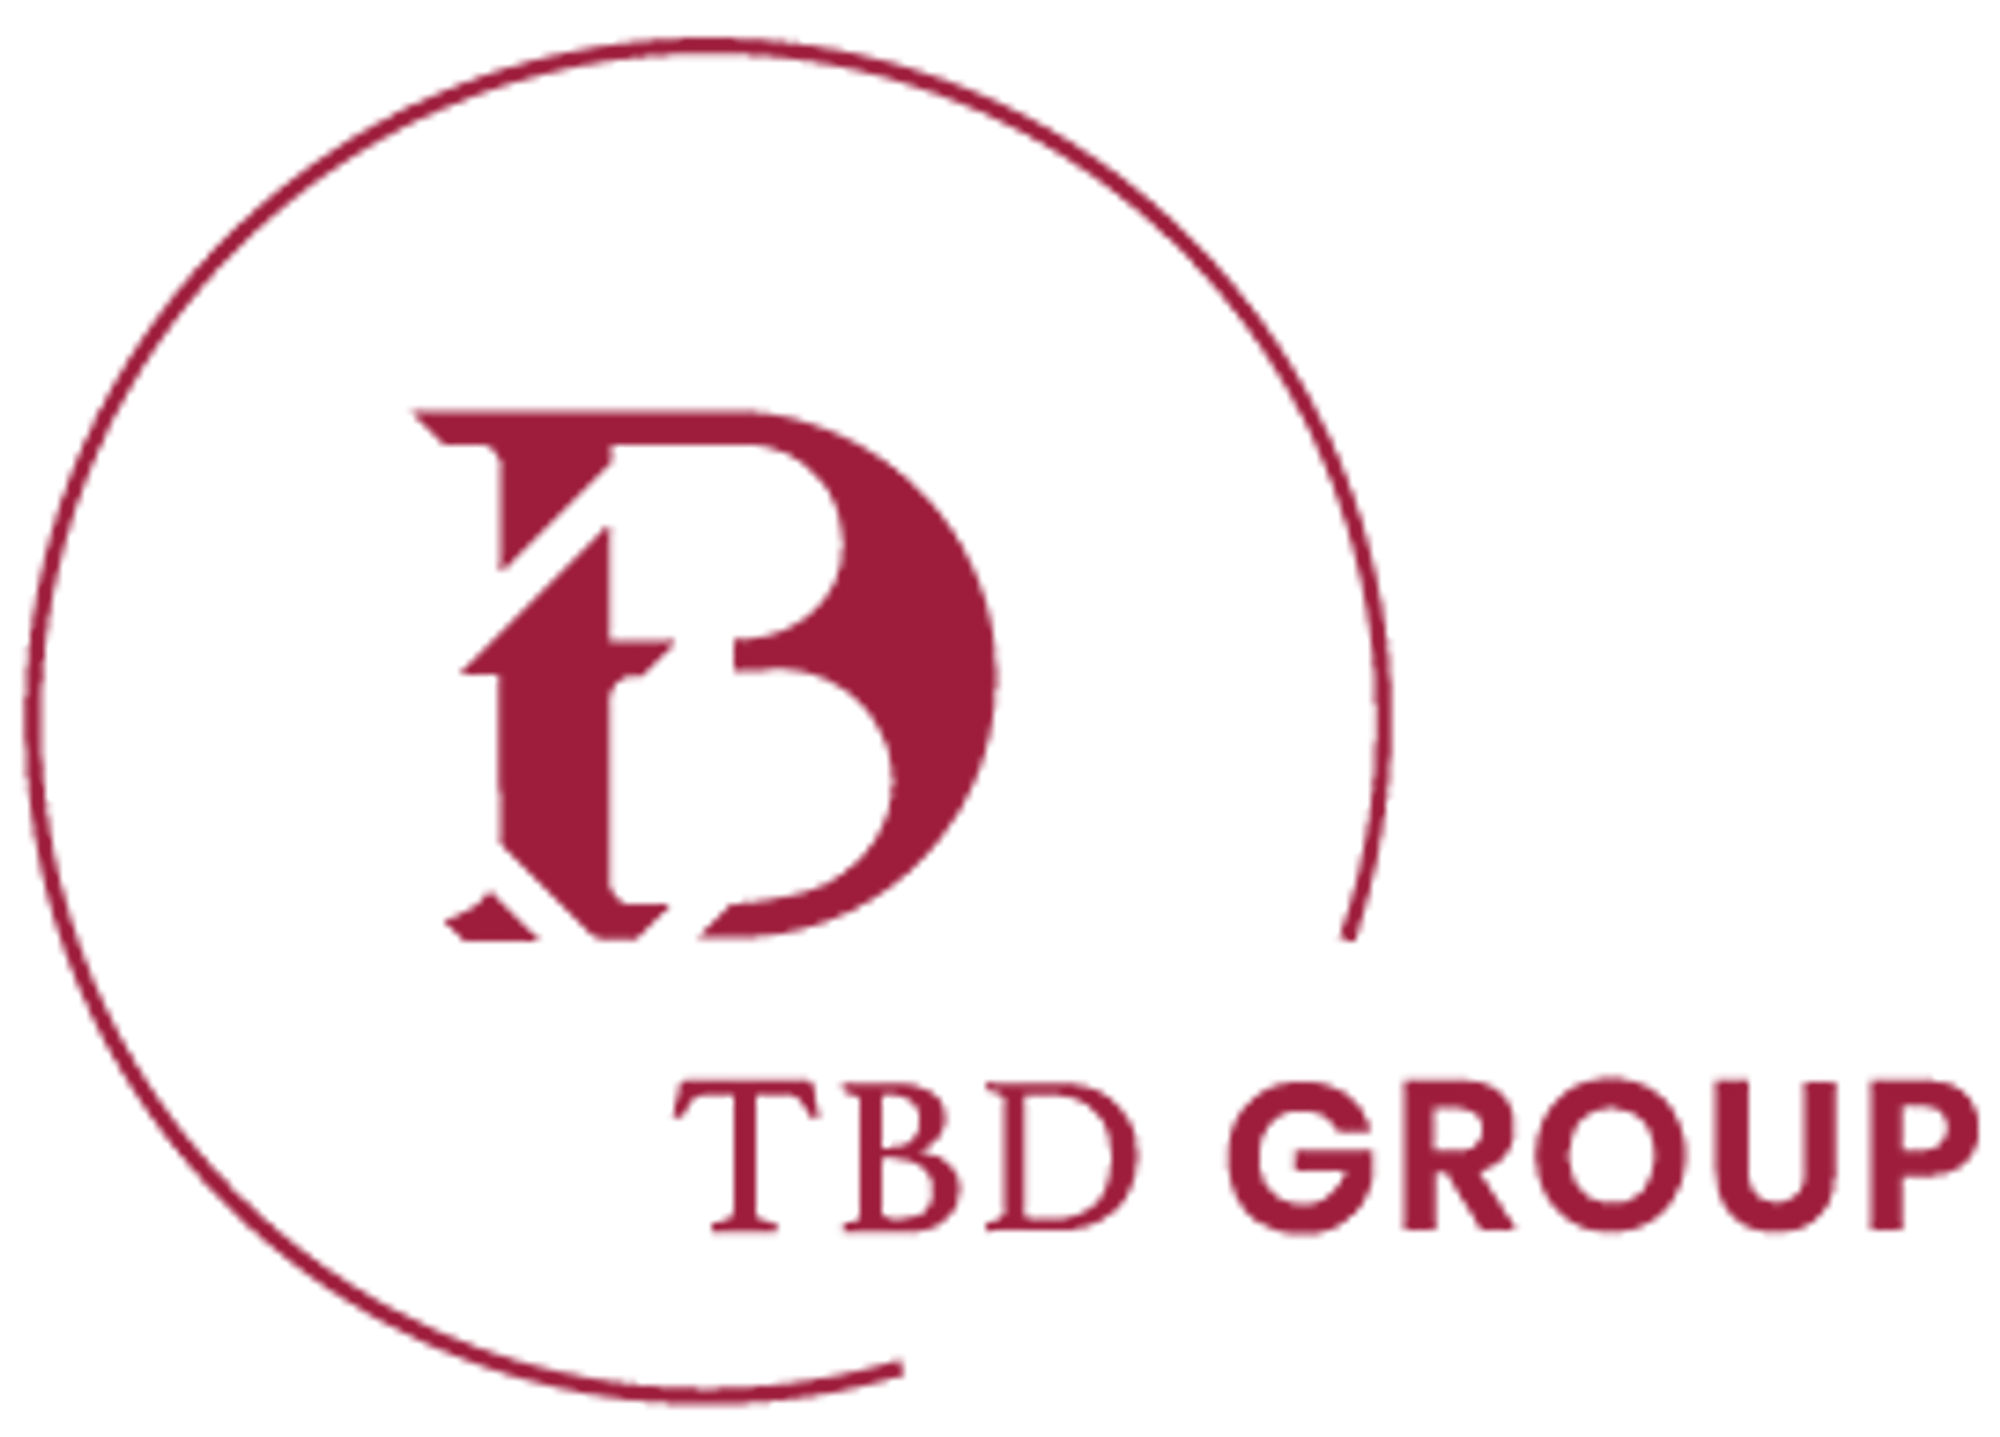 TBD Group